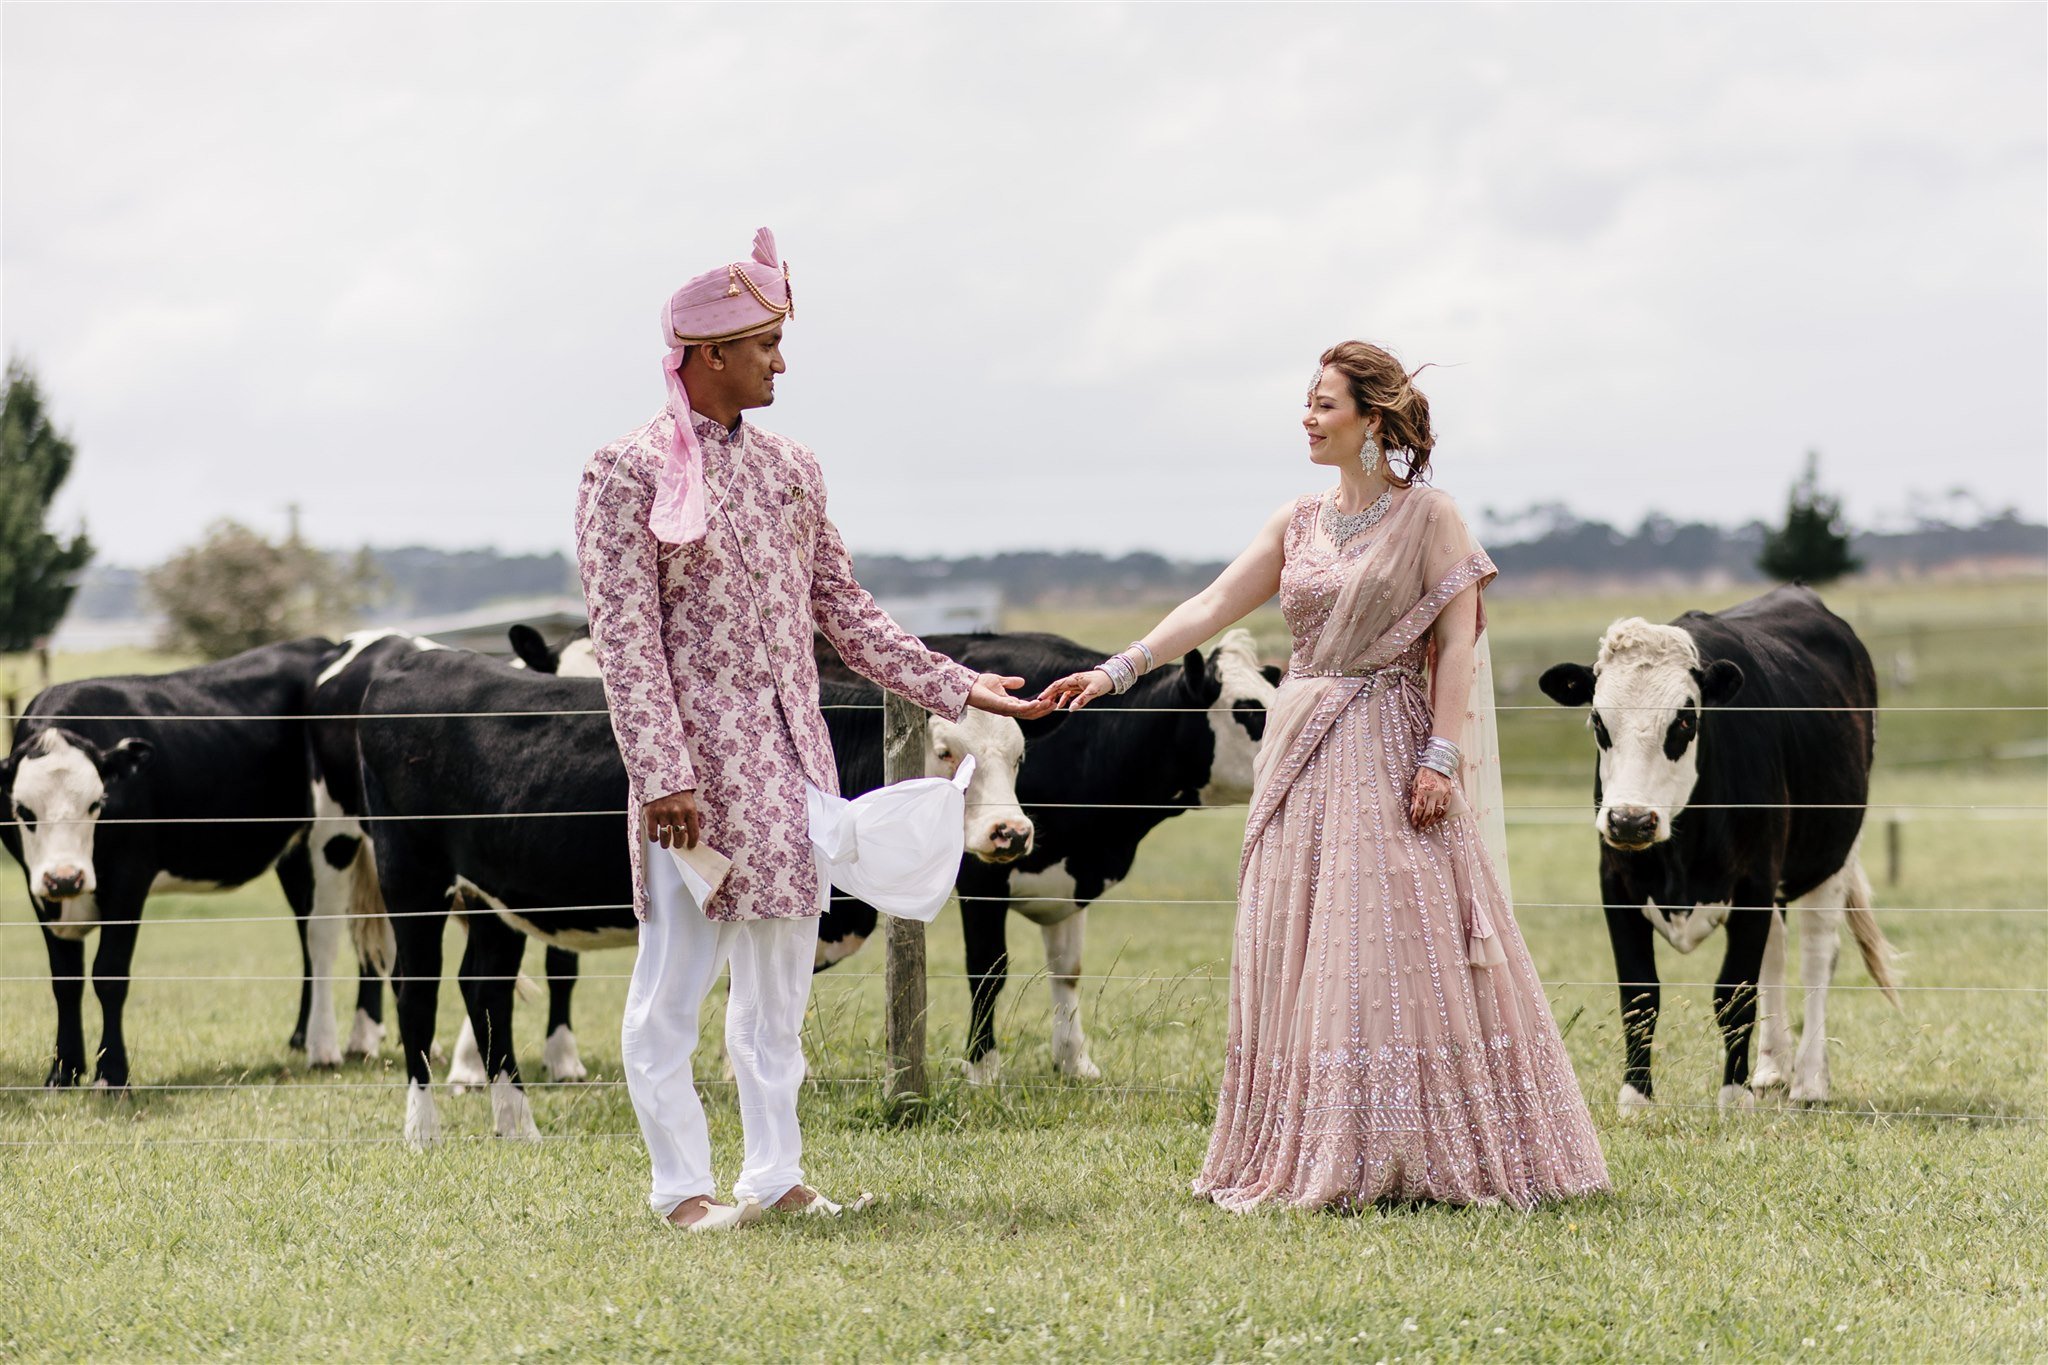 South-auckland-indian-wedding-ceremony-mandap-farm-diy-dear-white-productions-photographer-videographer-india-traditional  (71).jpg